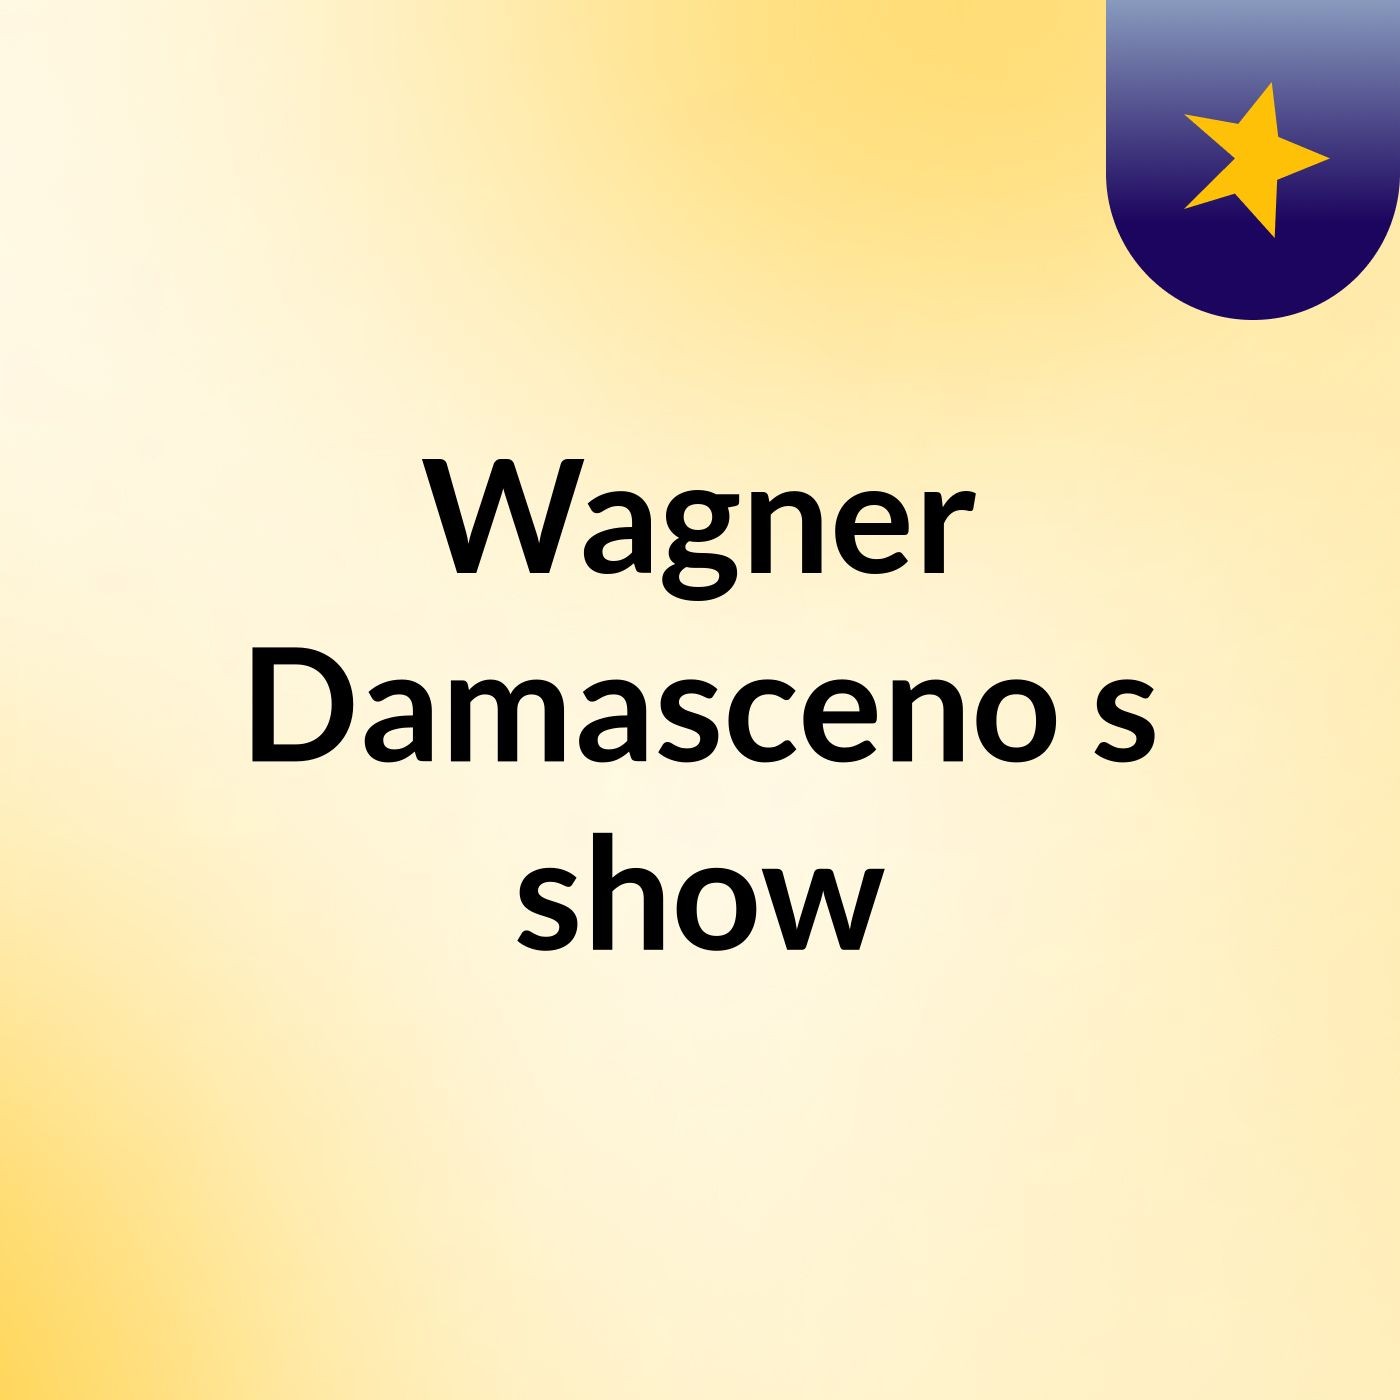 Wagner Damasceno's show